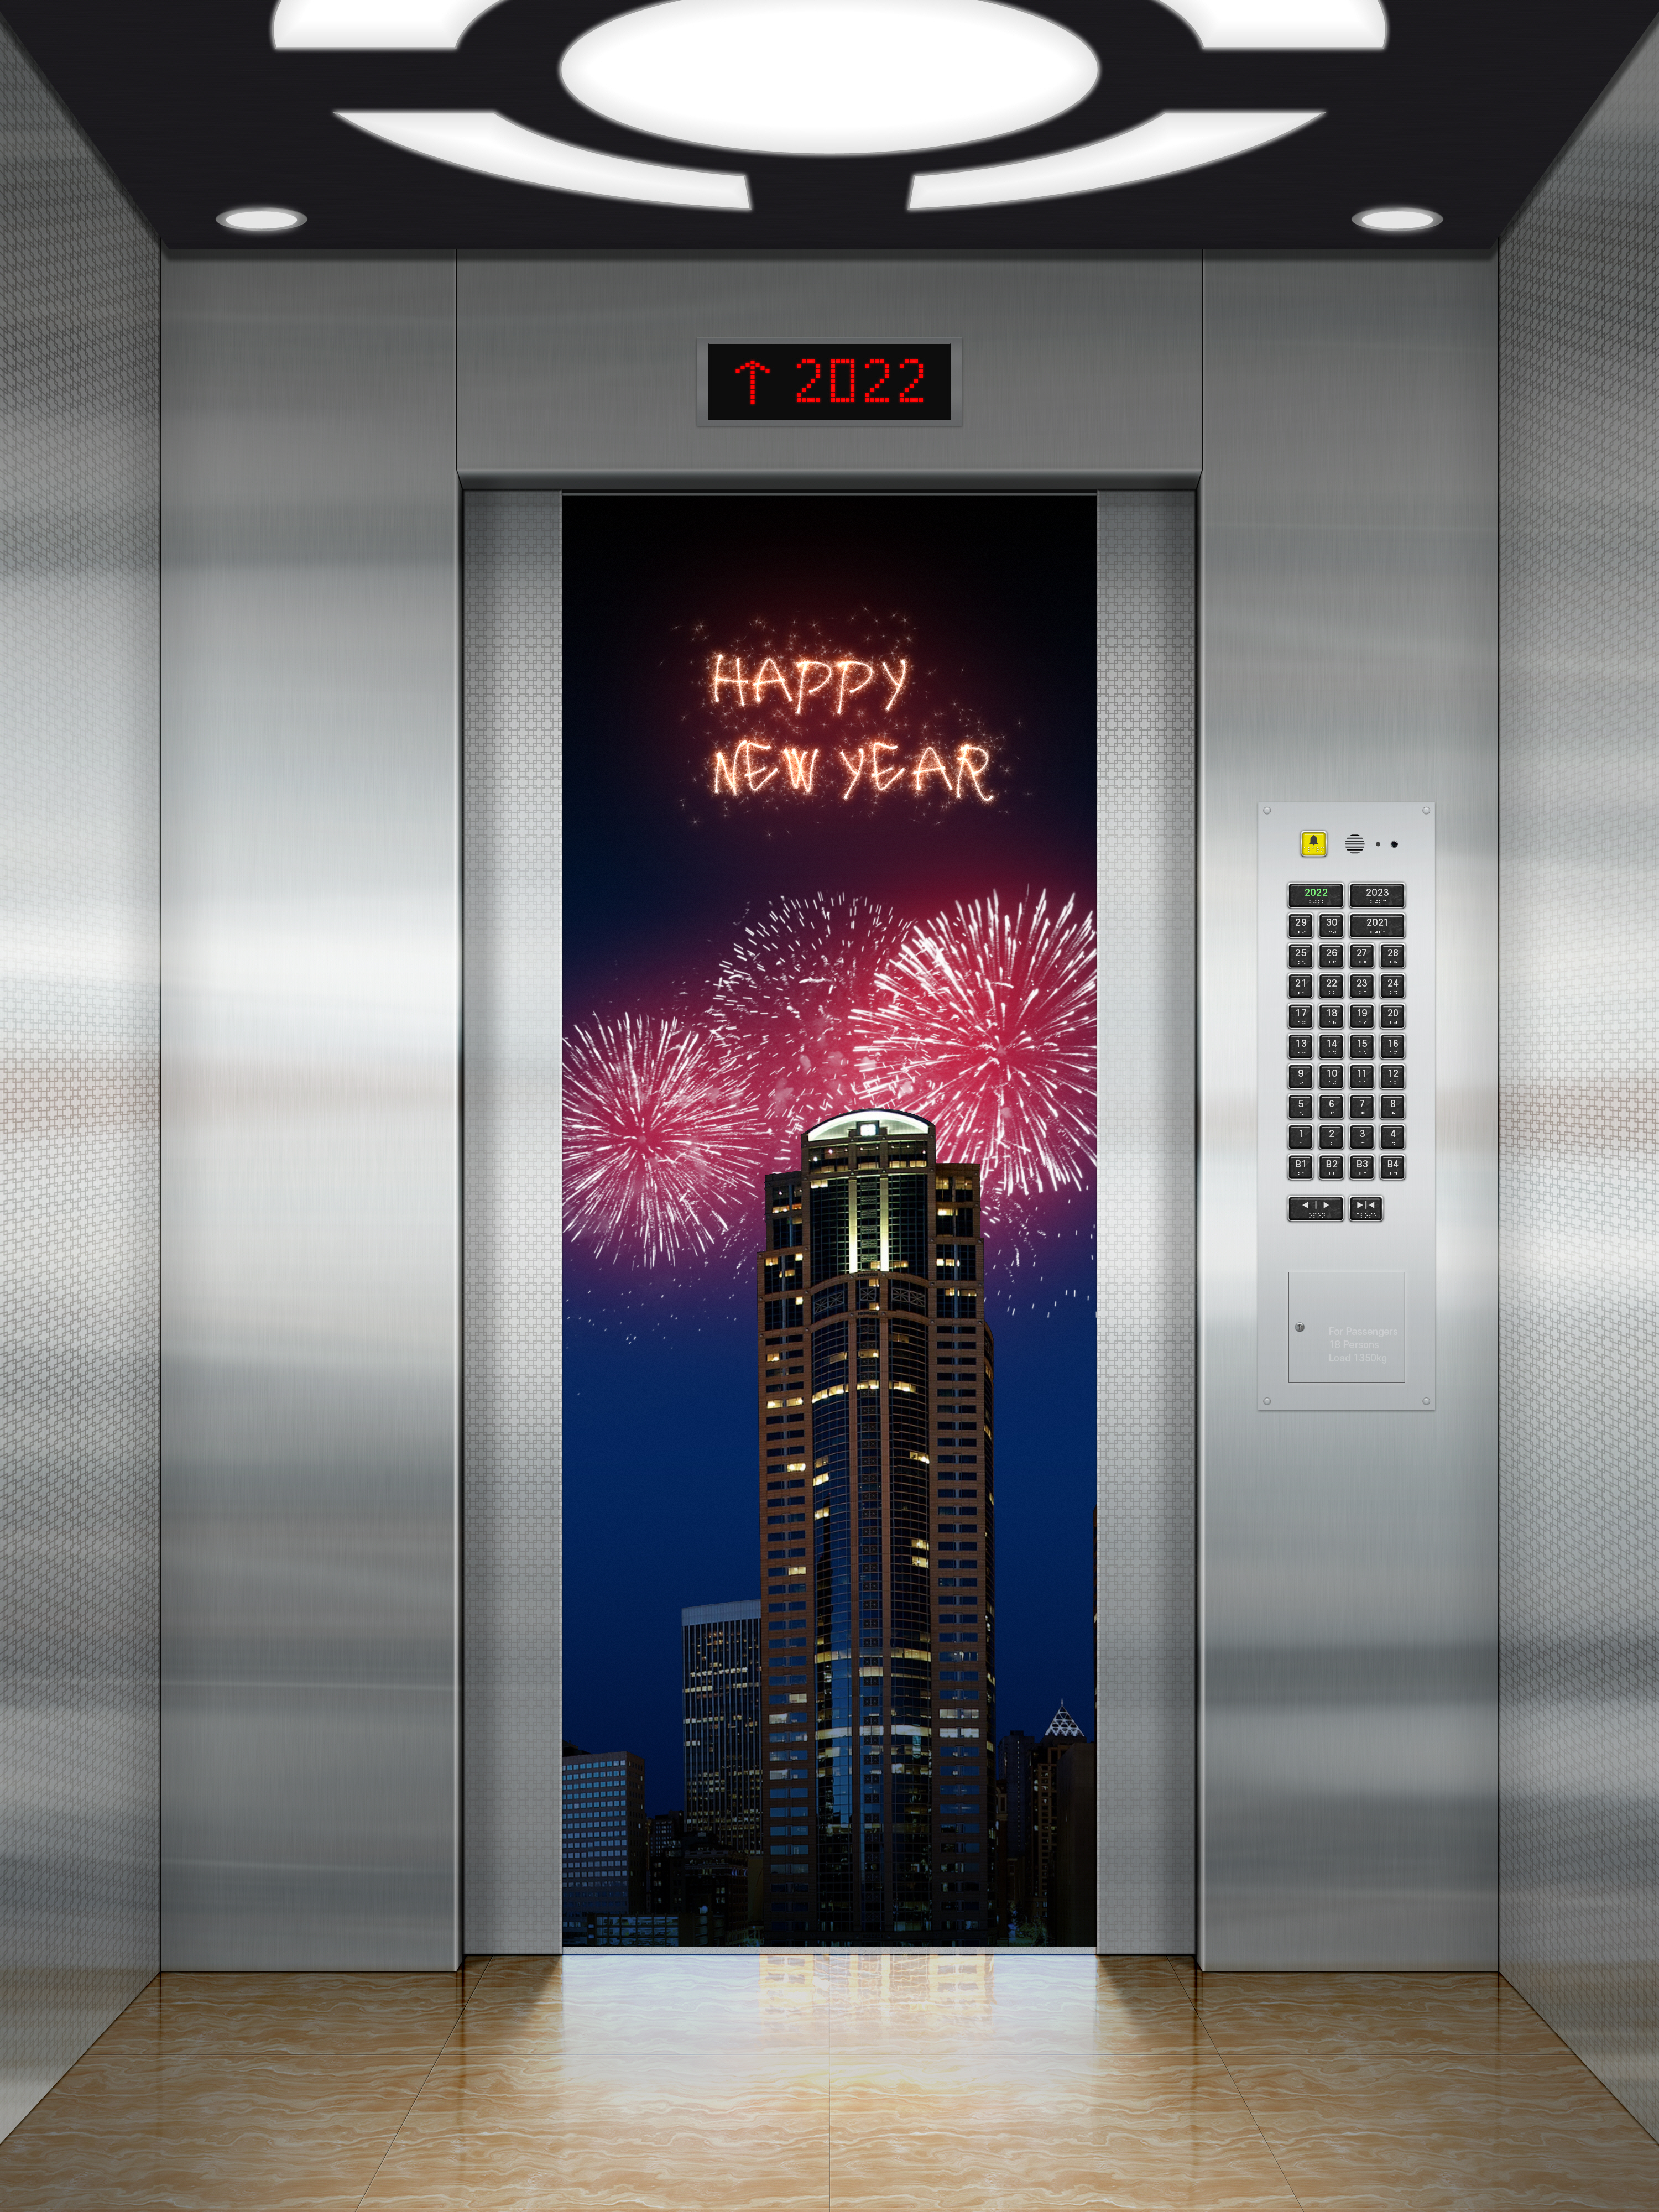 2022 Year Happy New Year Elevator Building Fireworks 3000x4000